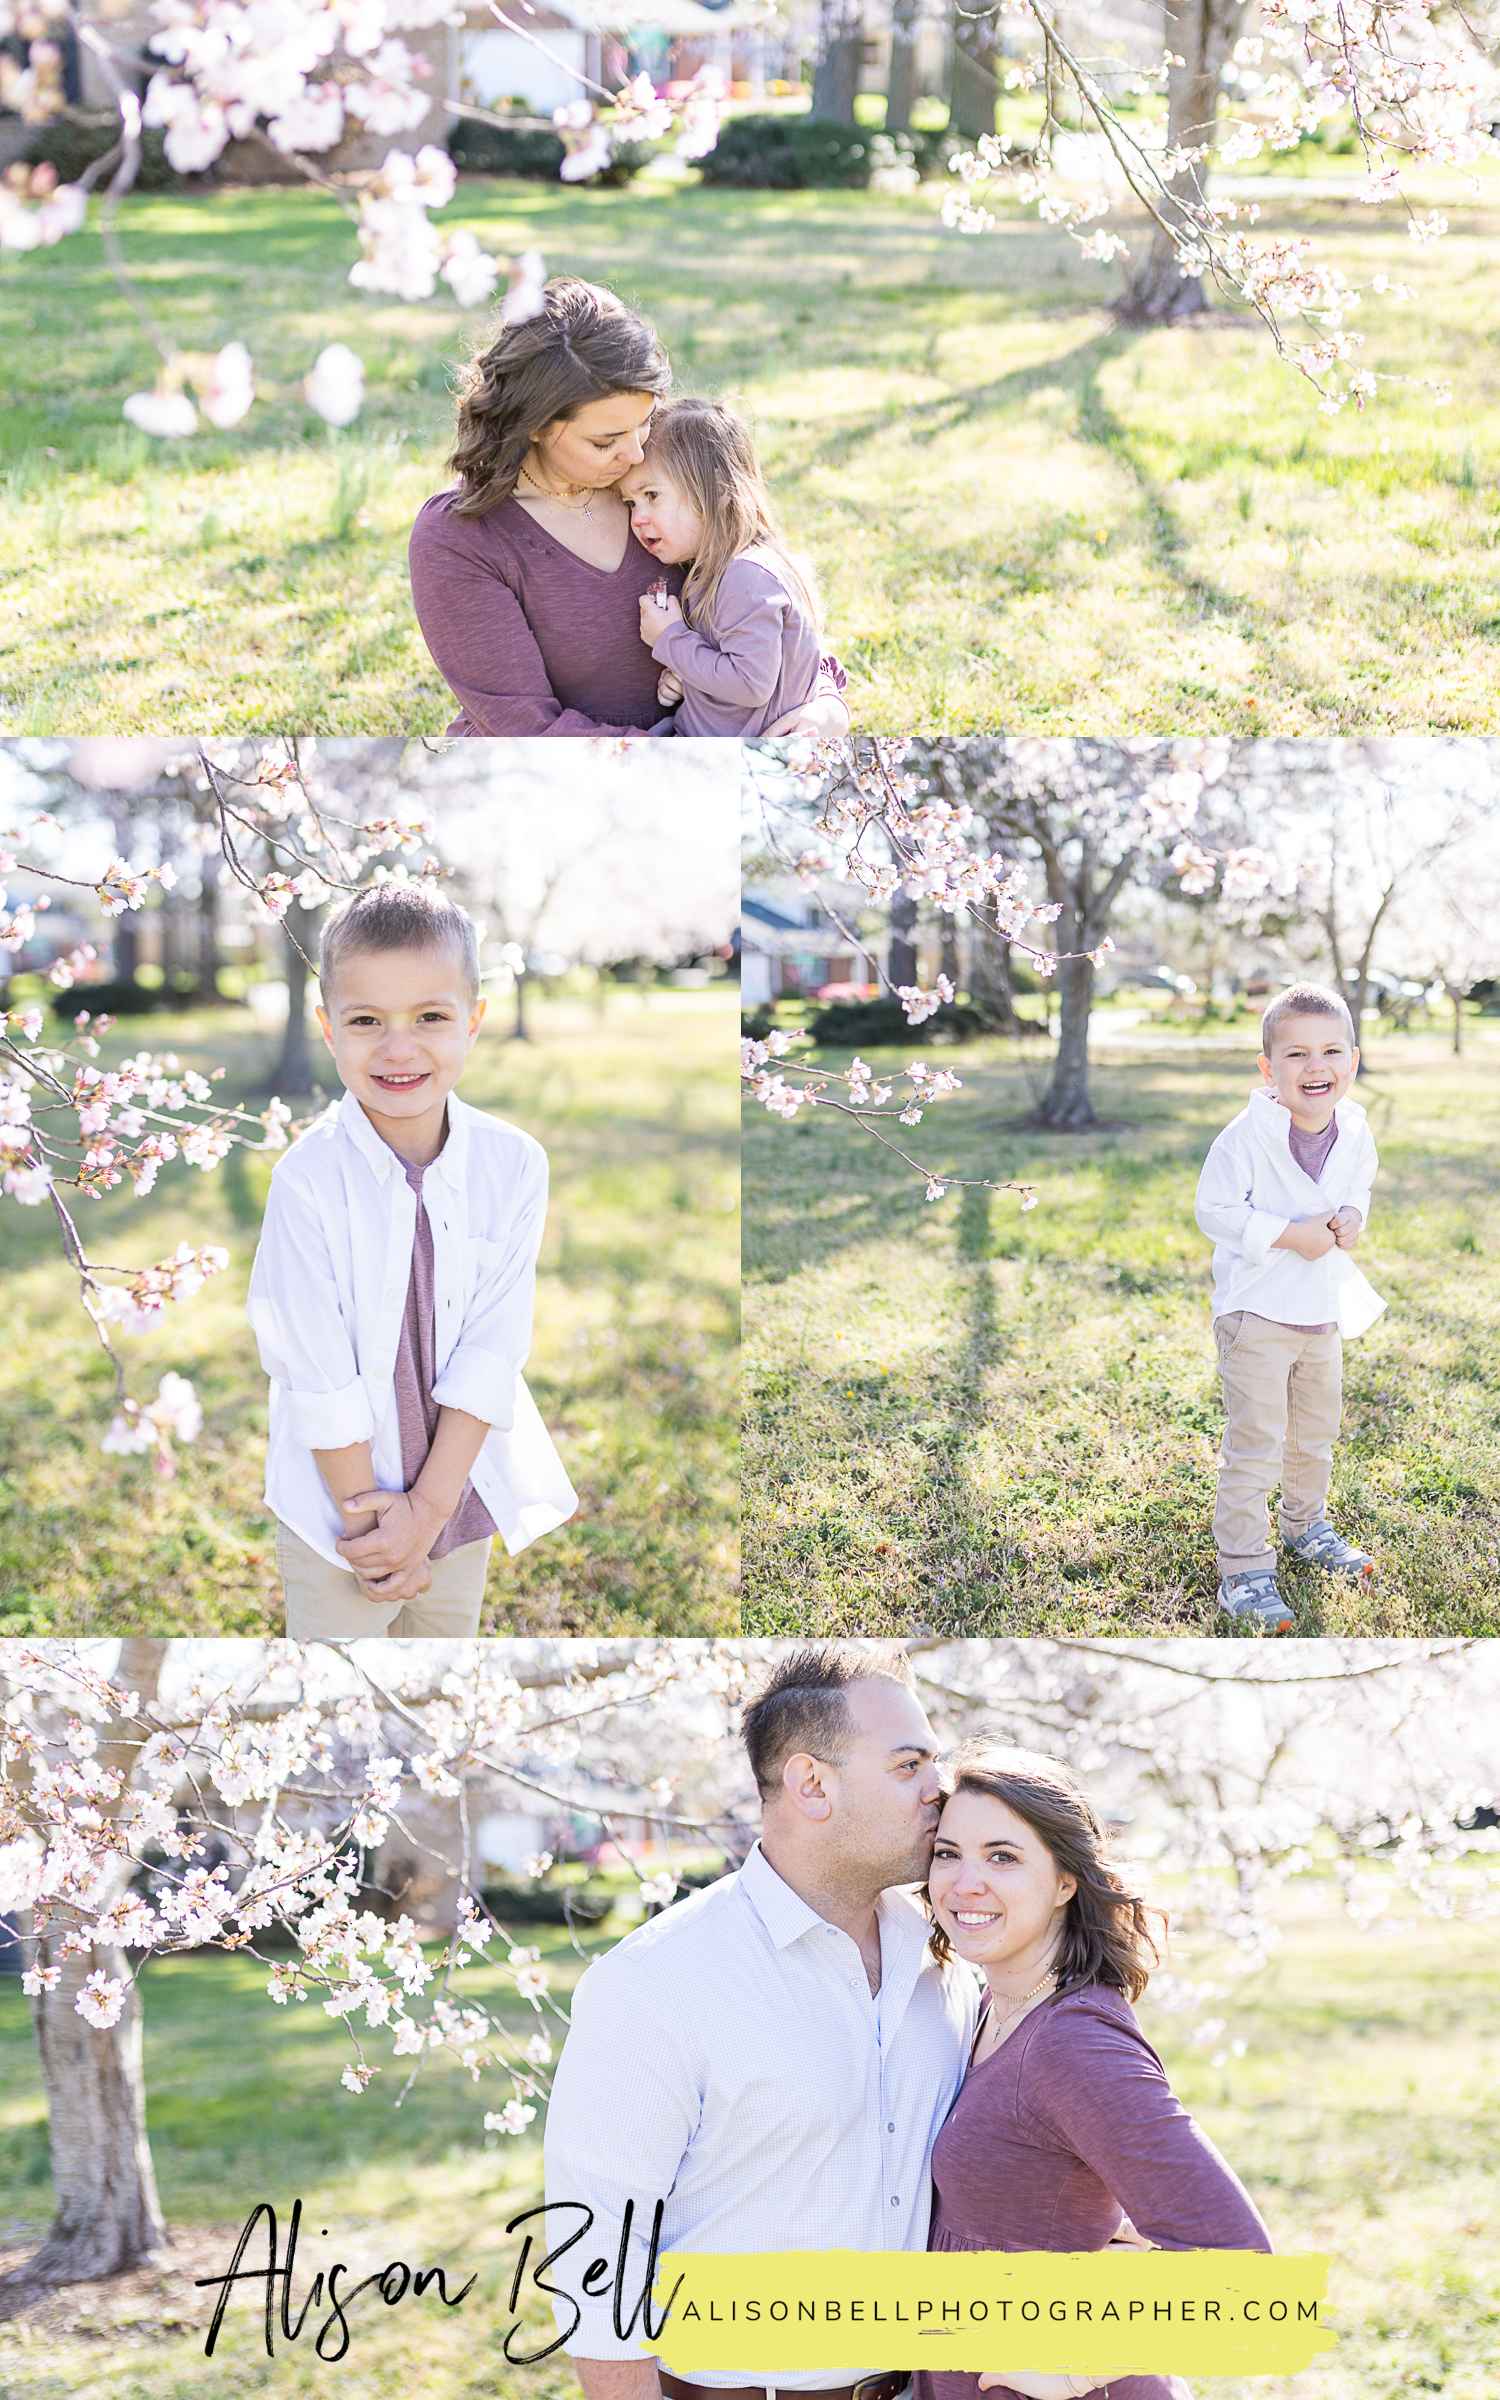 Spring cherry blossom family photos in a city park virginia beach, va by alison bell photographer